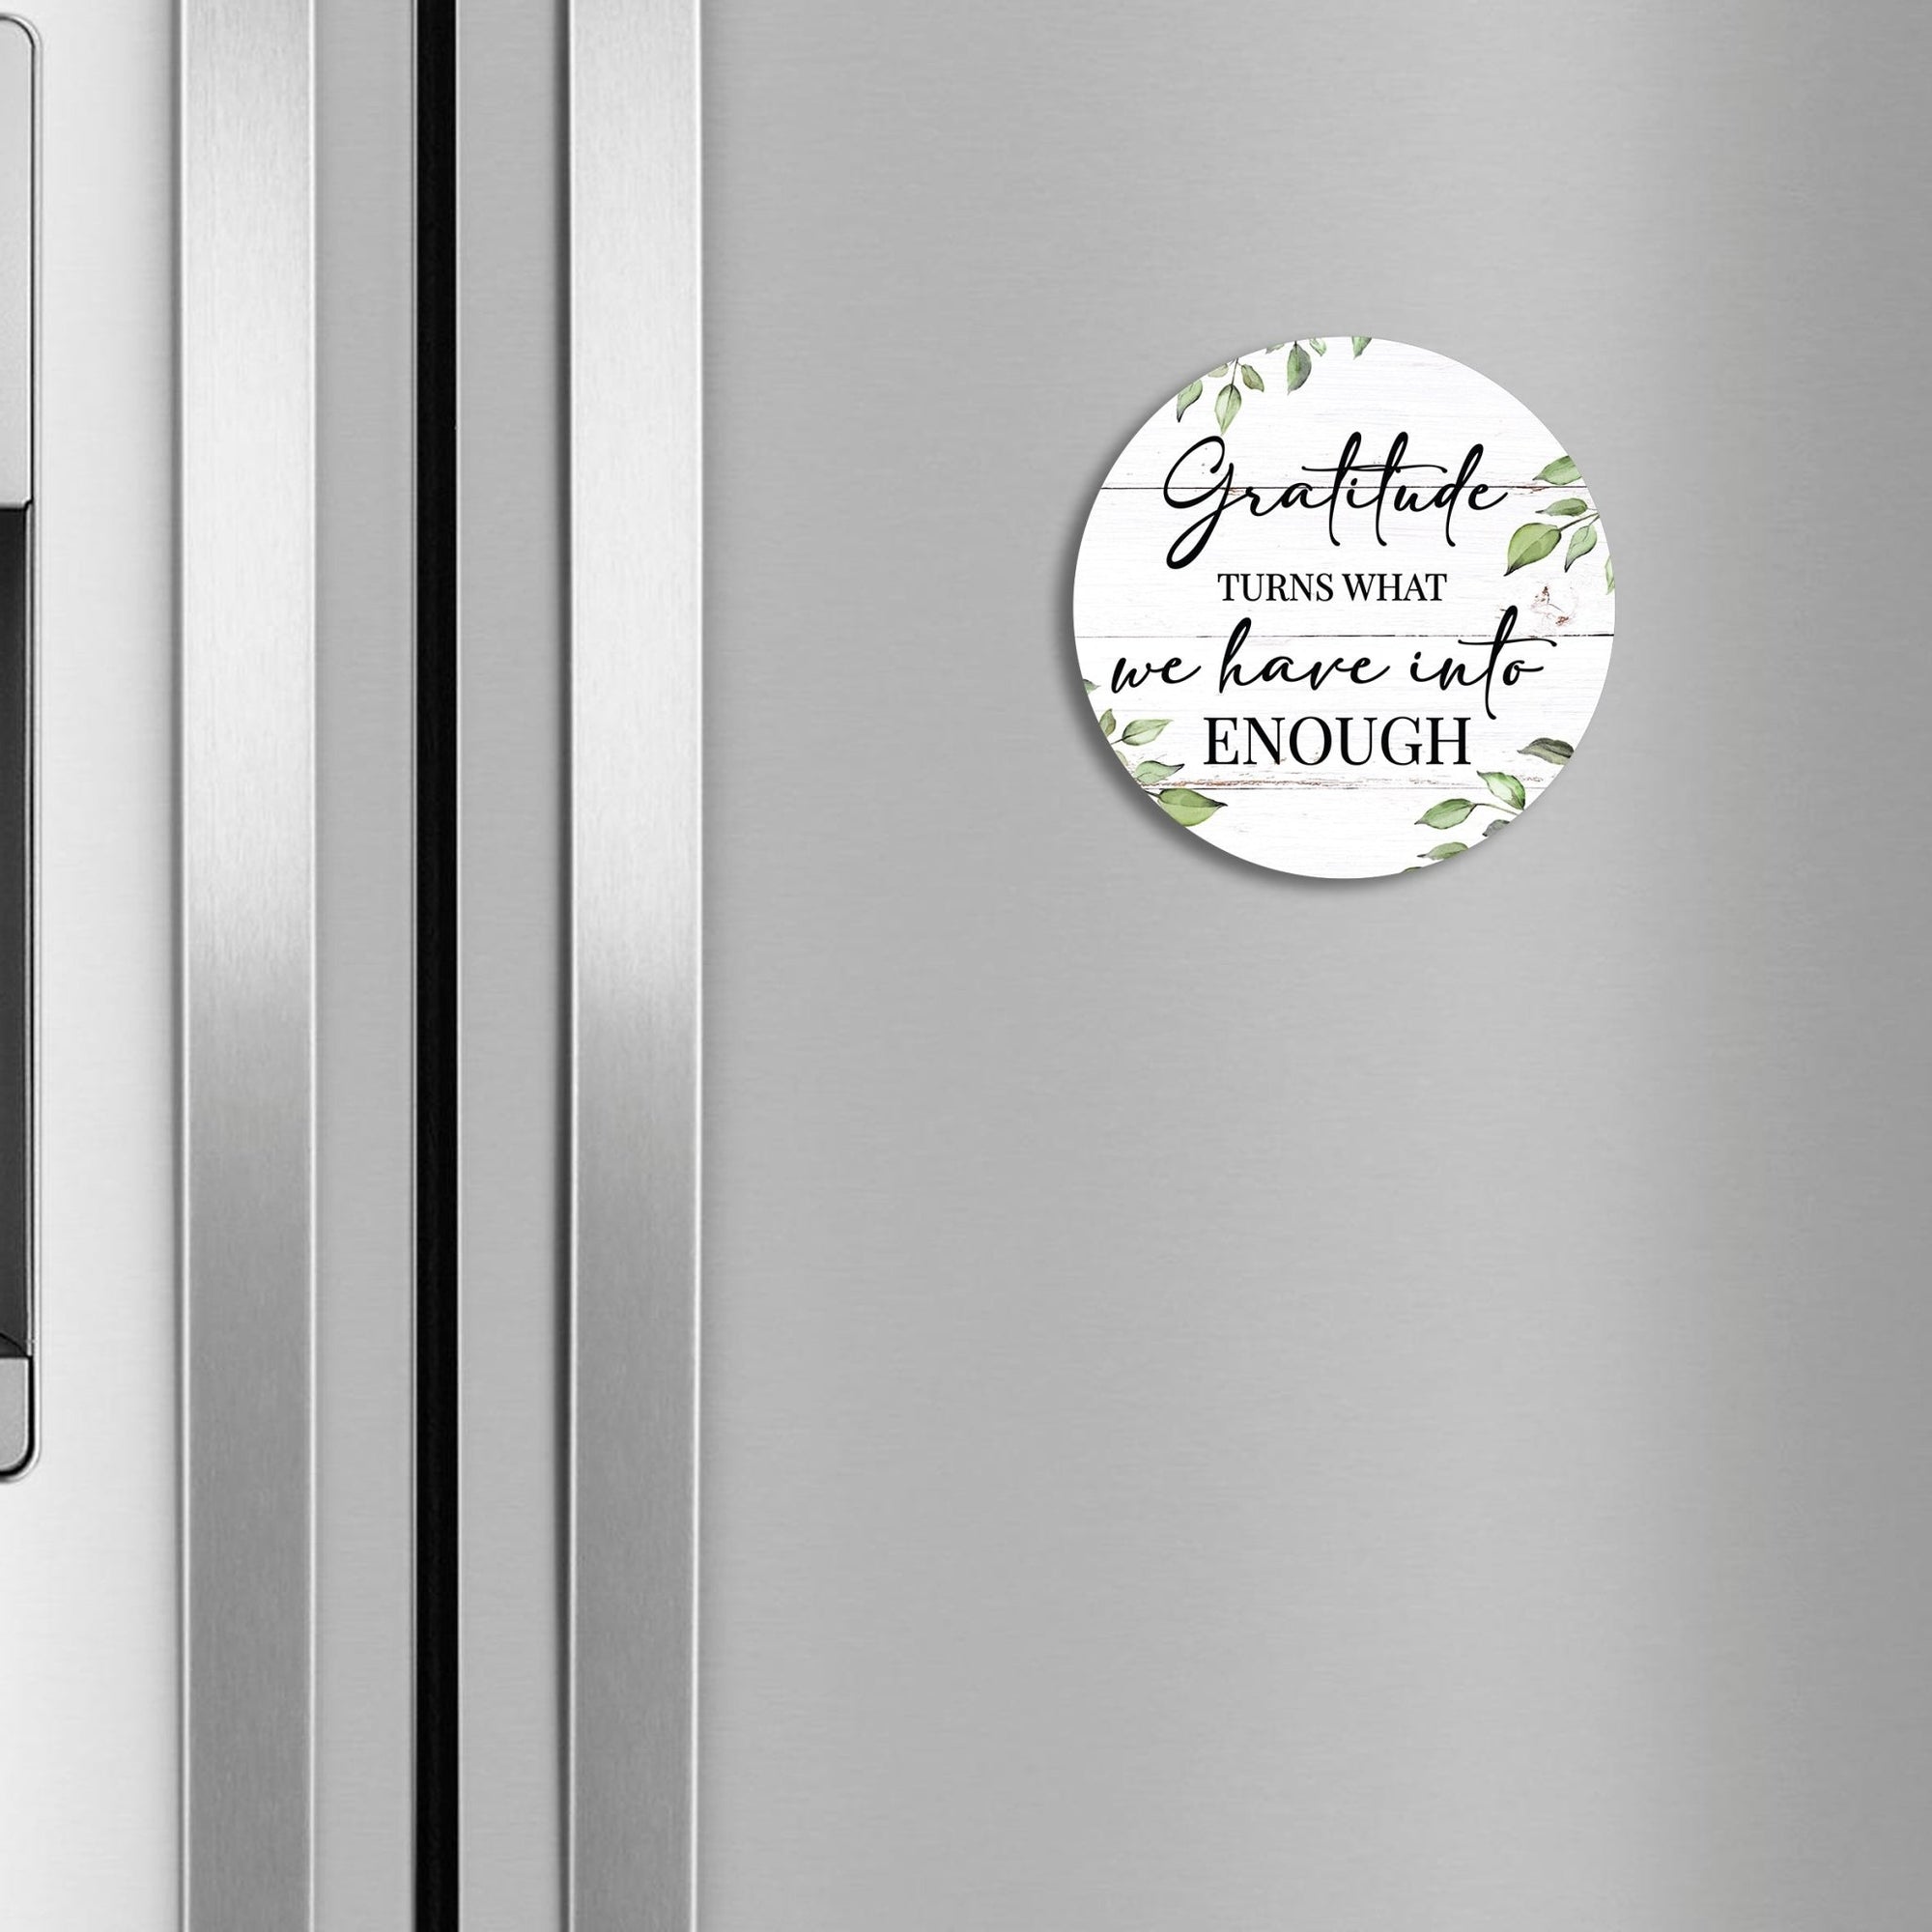 Family & Home Refrigerator Magnet Perfect Gift Idea For Home Décor - Gratitude Turns